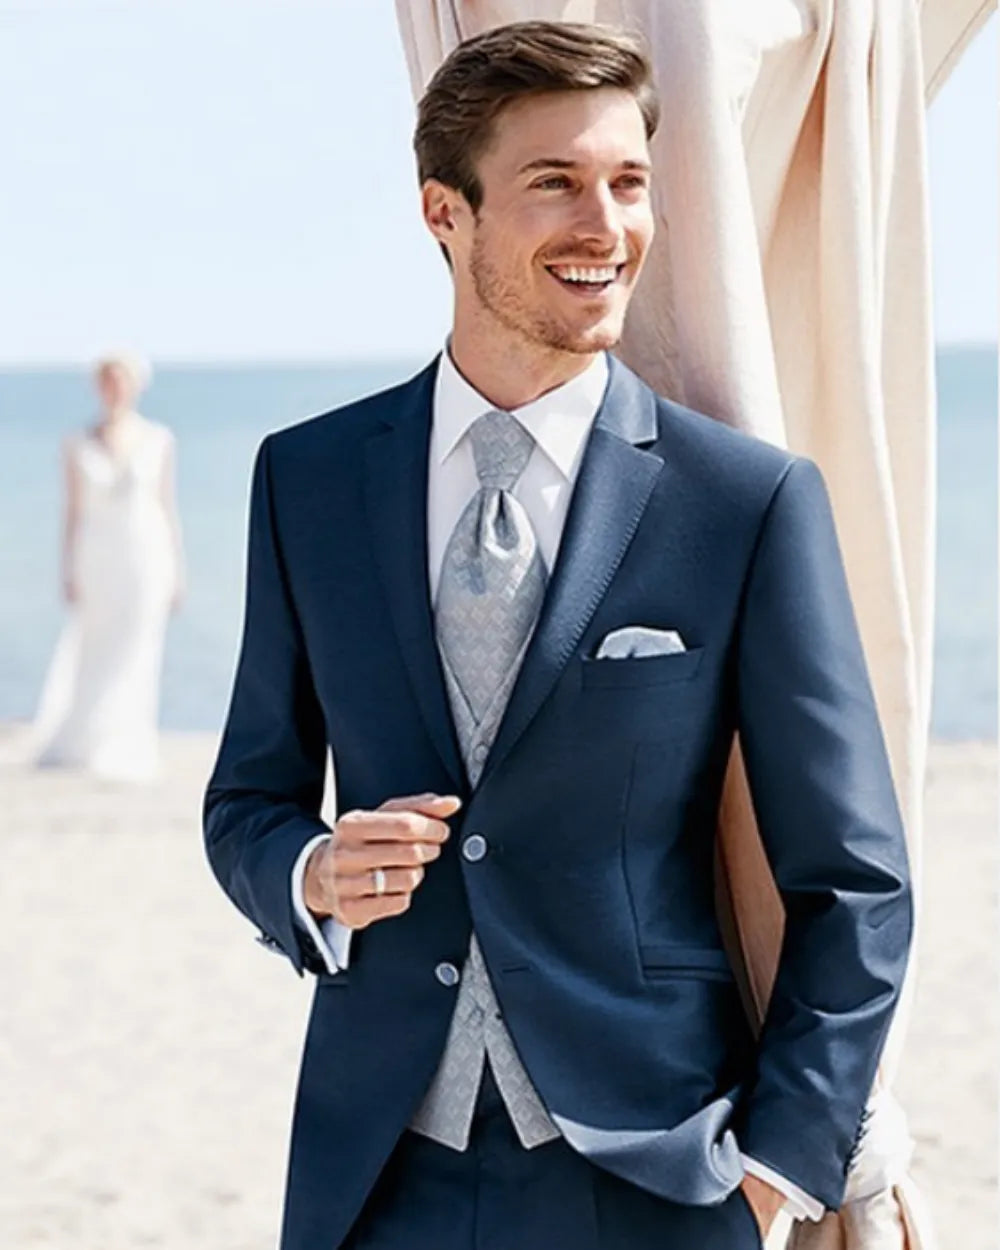 New Costume Slim Fit Men Suits Slim Fit Business Suits Groom Indigo Tuxedos for Formal Wedding Suit Jacket Pant Vest 3 Pieces